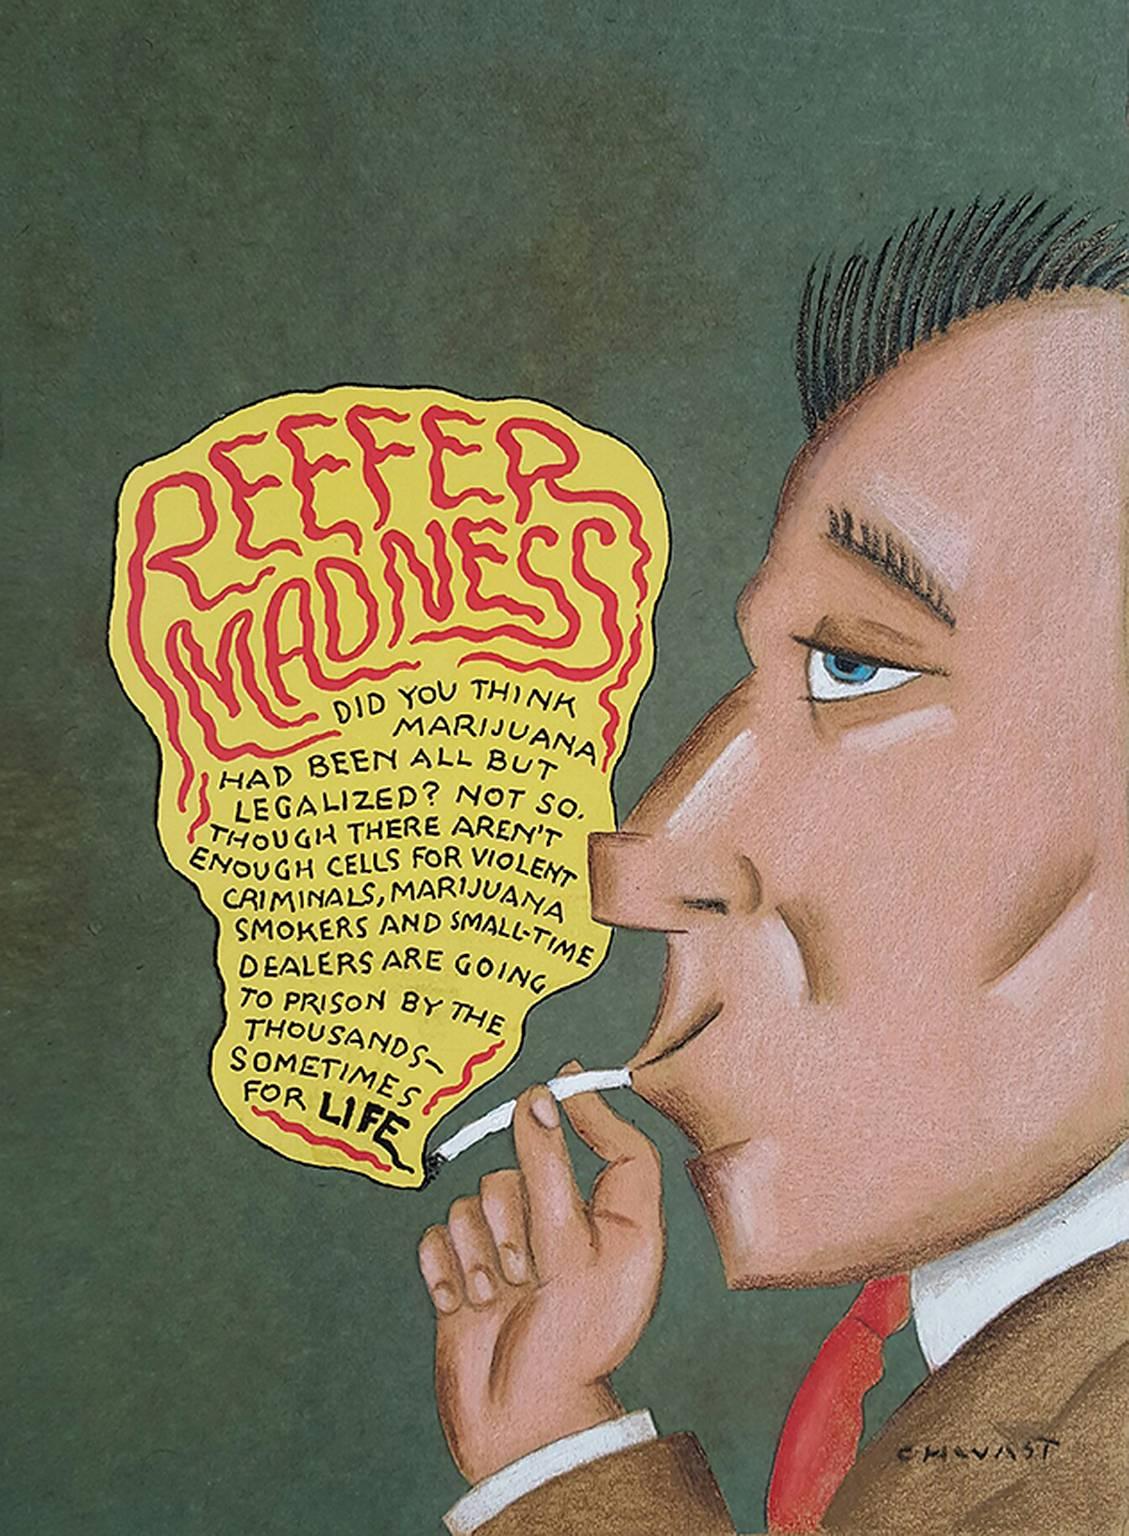 Reefer Madness, Marajuana  - Topf  - Cannabis - Titelseite Atlantic Monthly Magazine